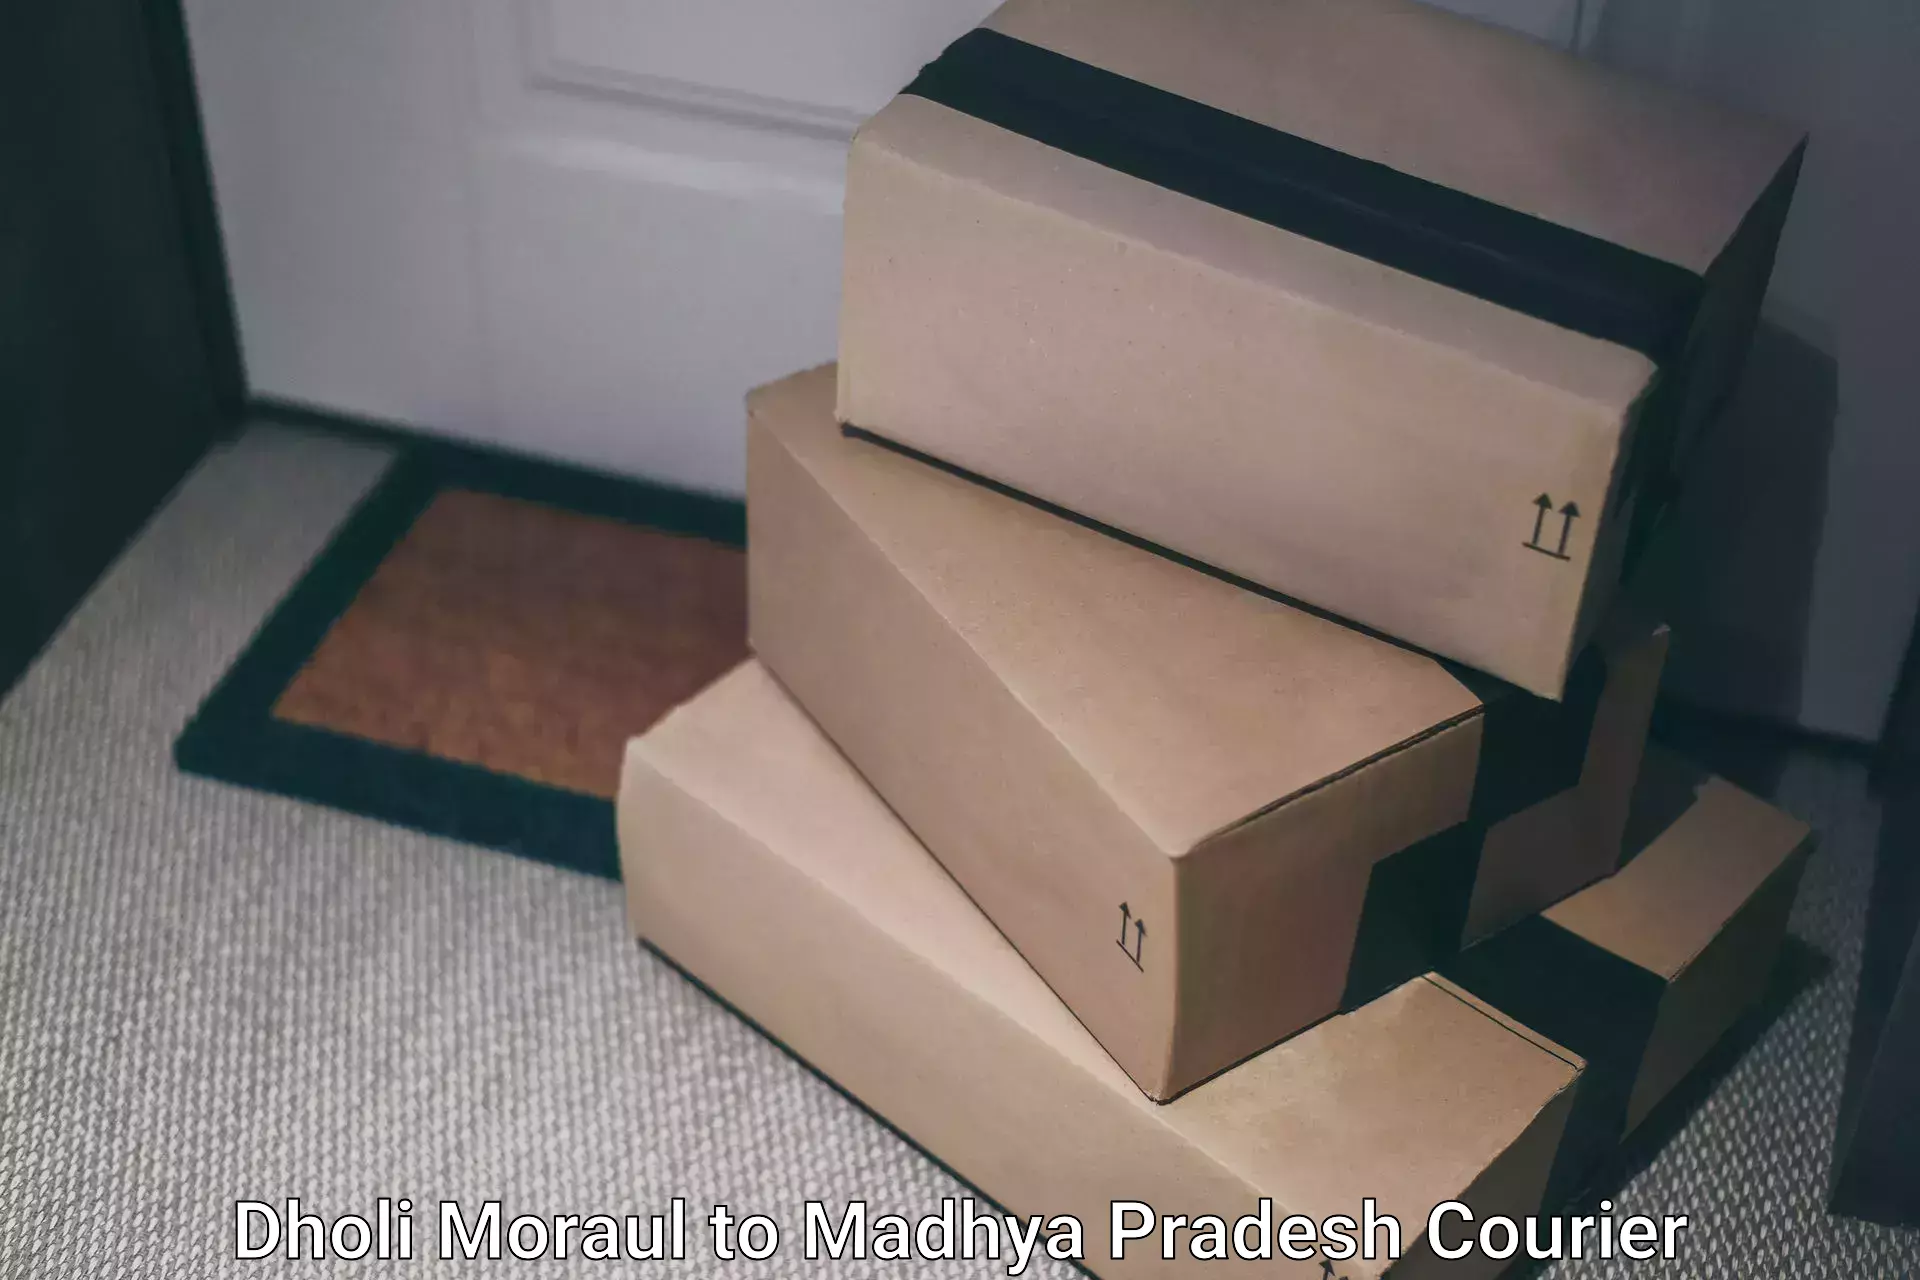 Next-day delivery options Dholi Moraul to Madhya Pradesh